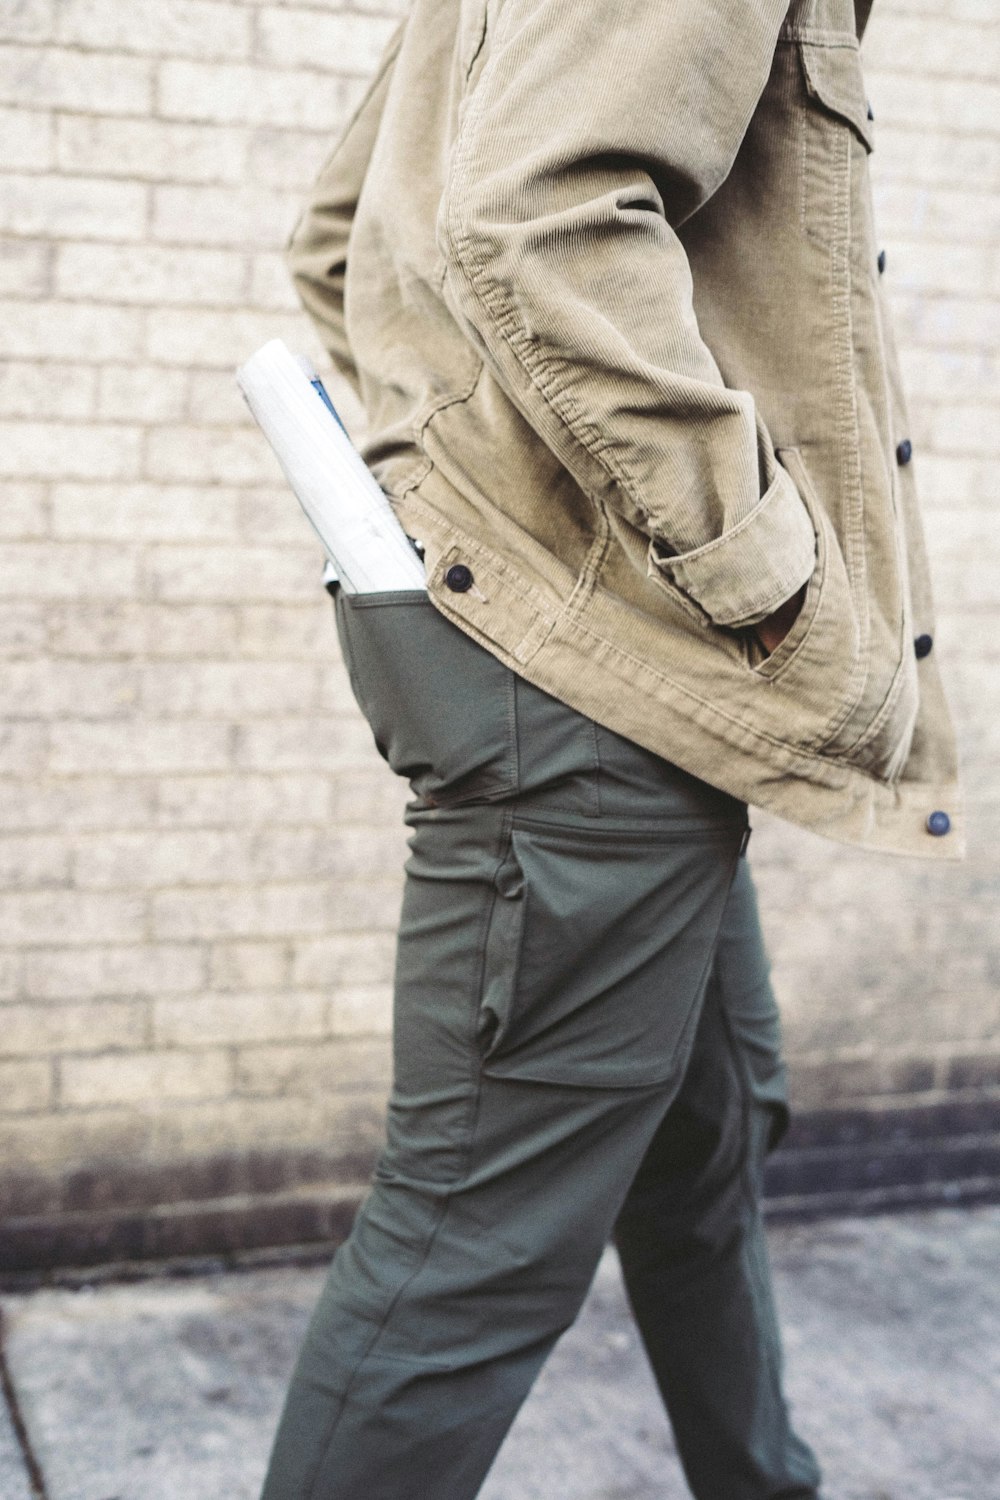 man walking hand on jacket's pocket with rolled paper on pants back pocket